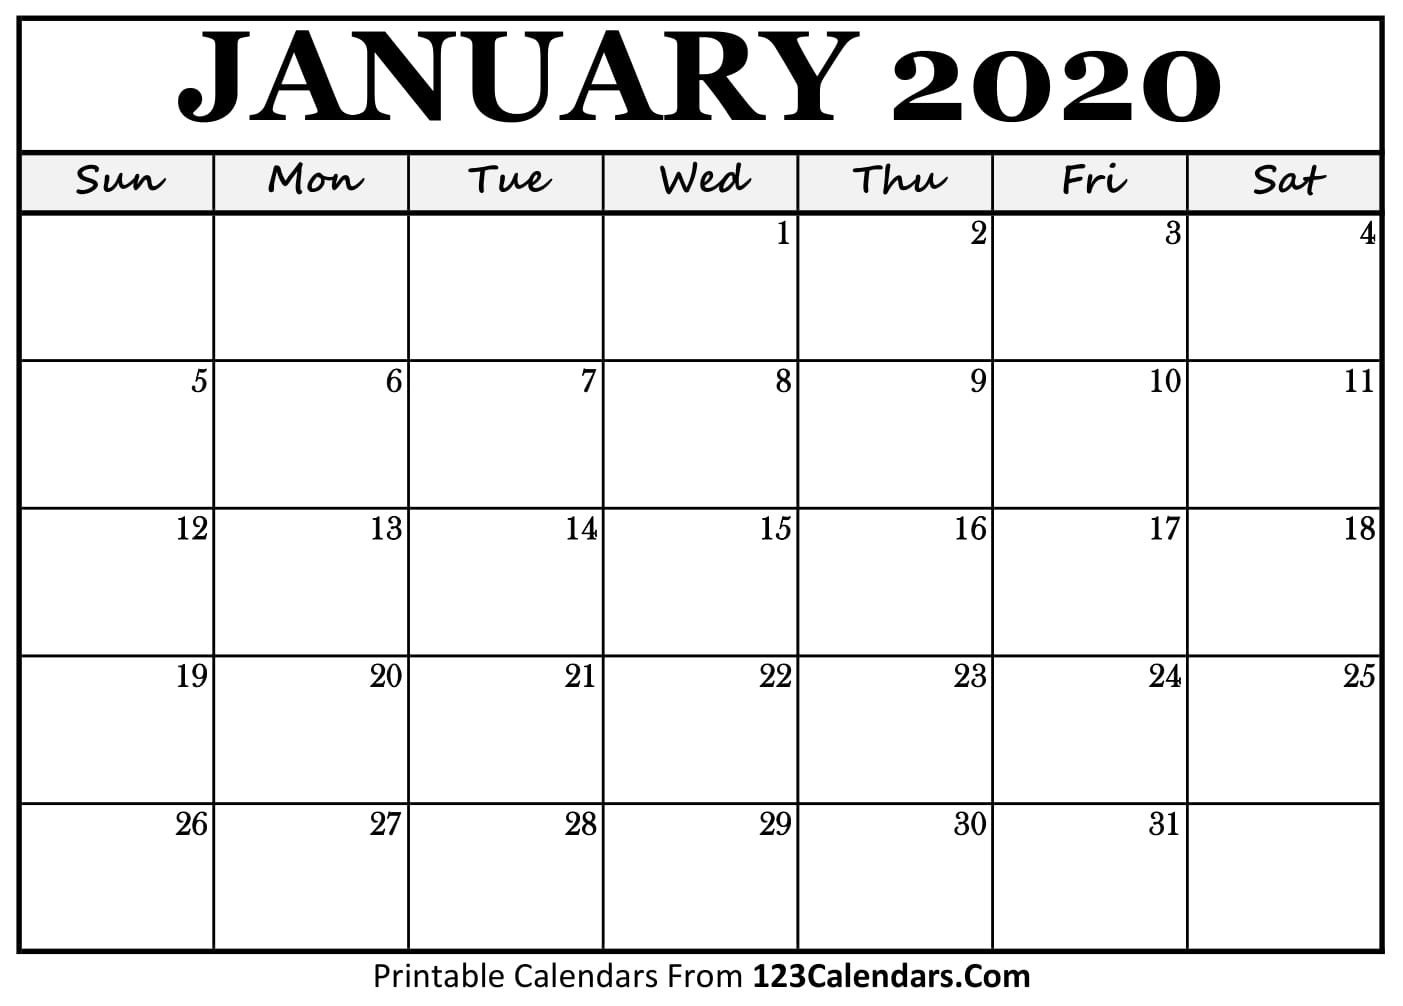 january-2020-printable-calendar-123calendars